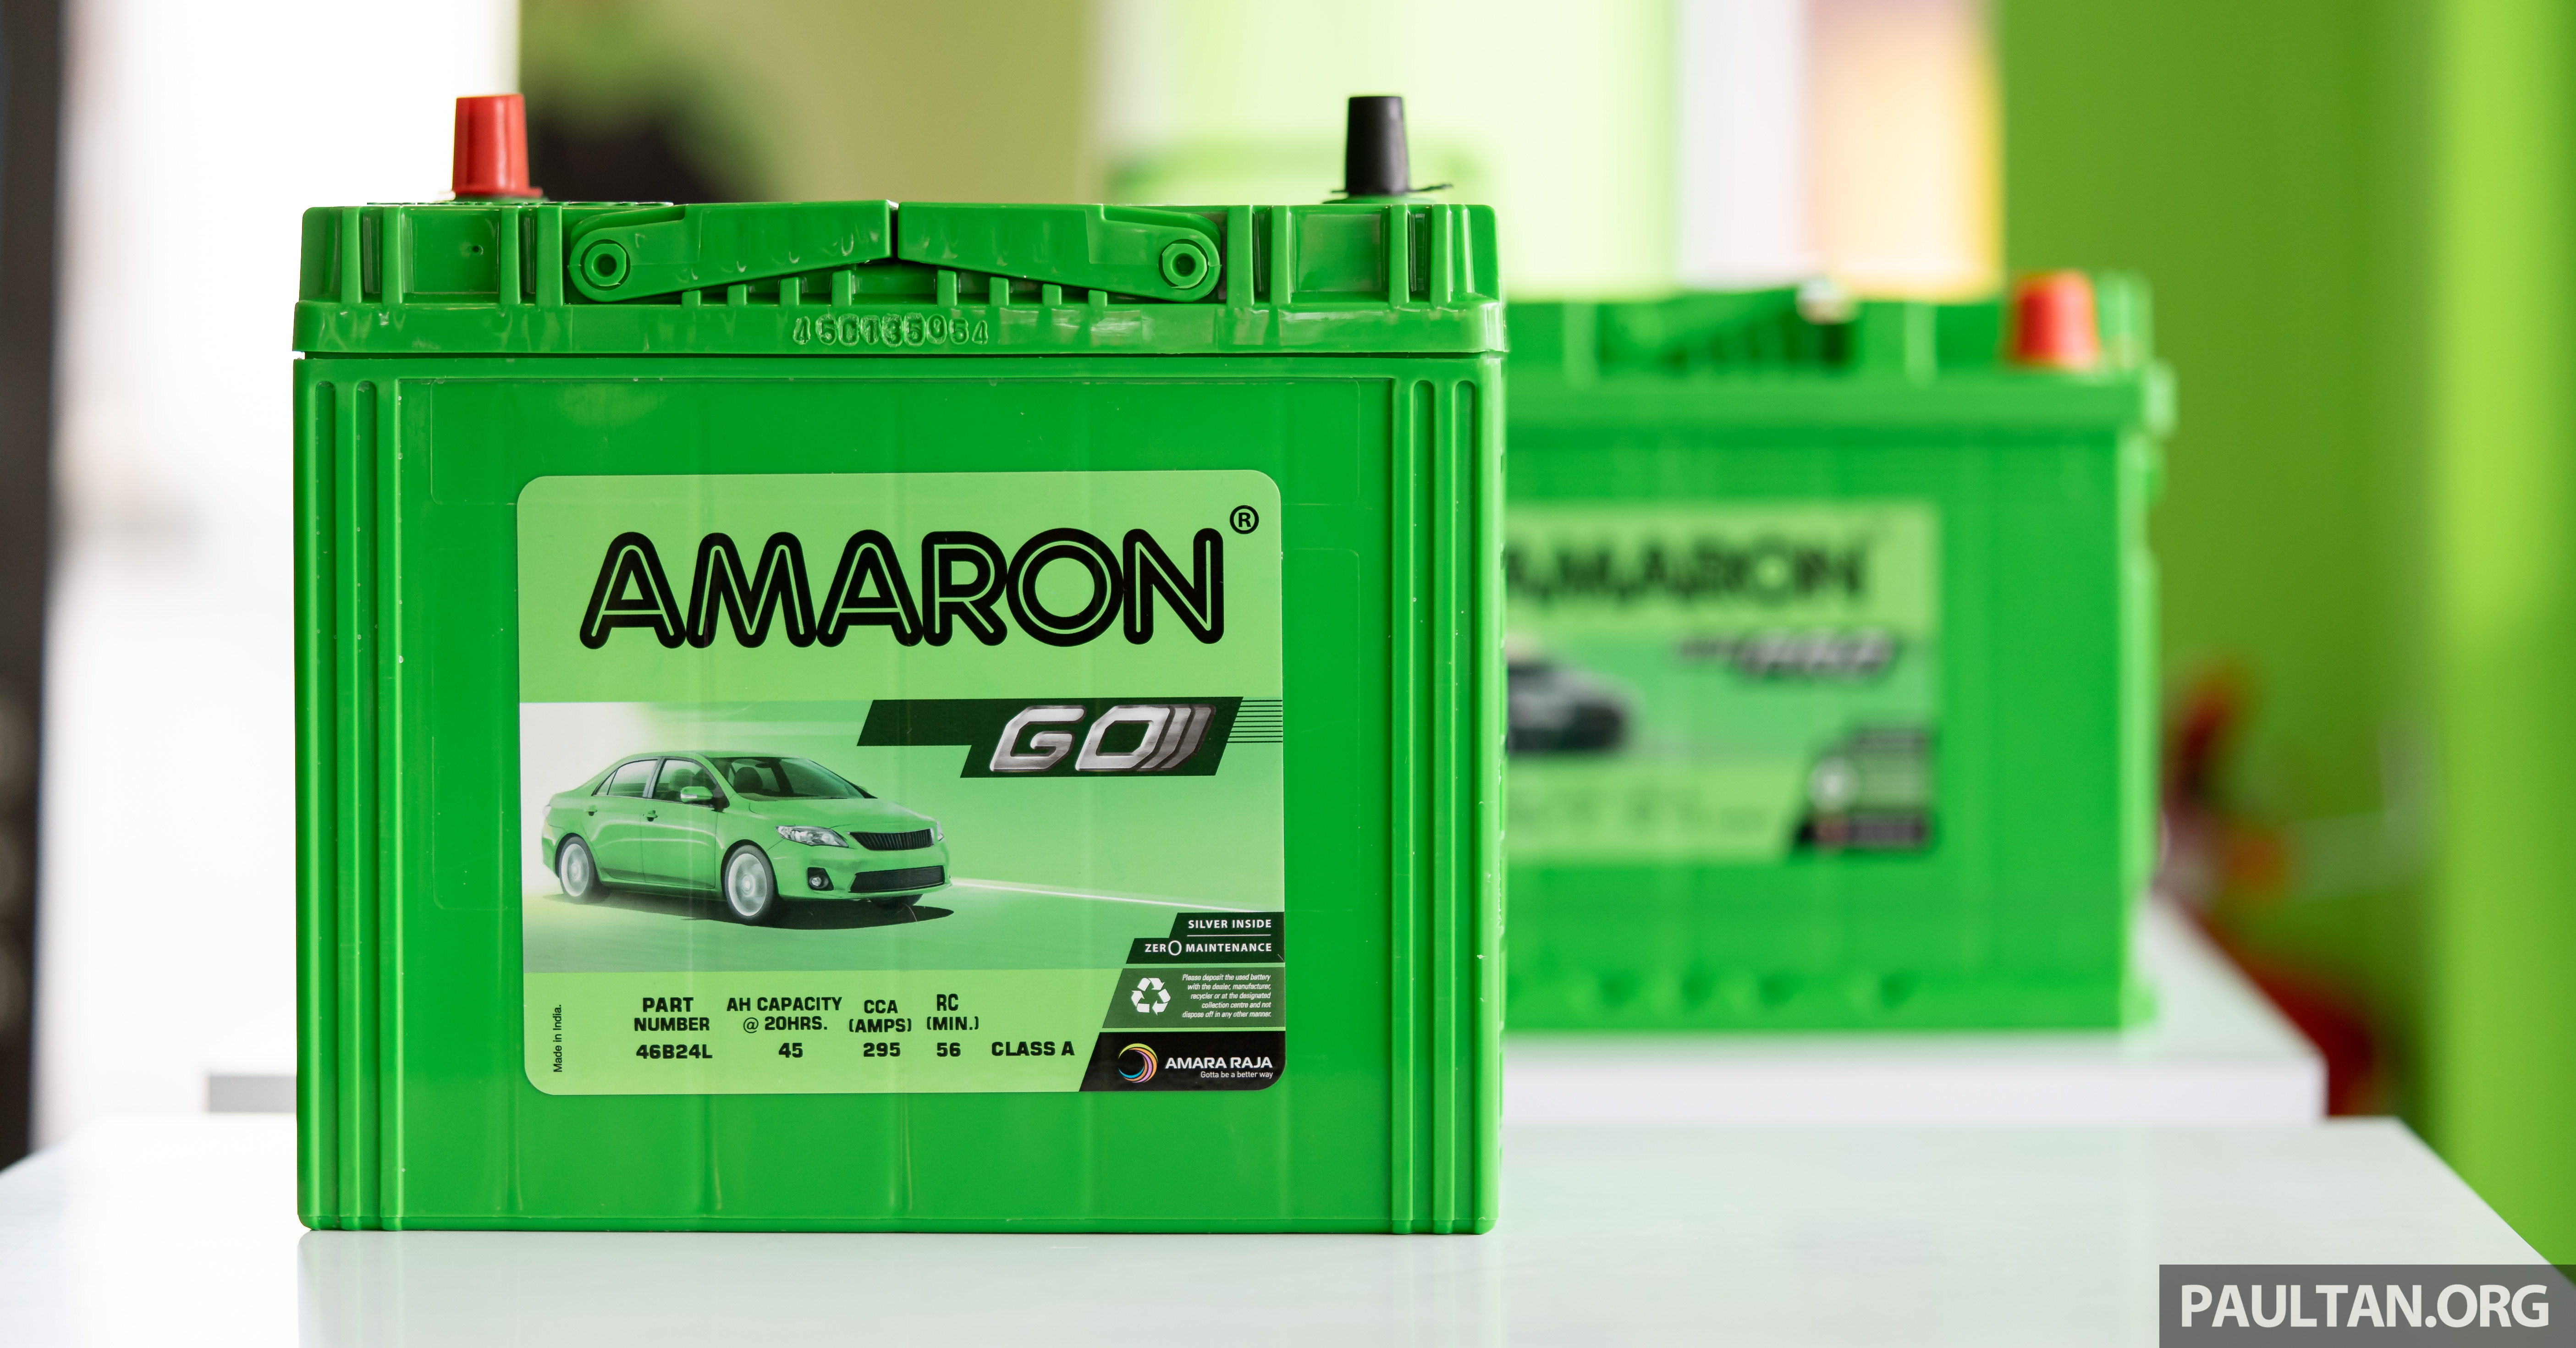 Go batteries. Amaron. Centennial 36 months аккумулятор. Marwayne Battery. Maxma Battery.